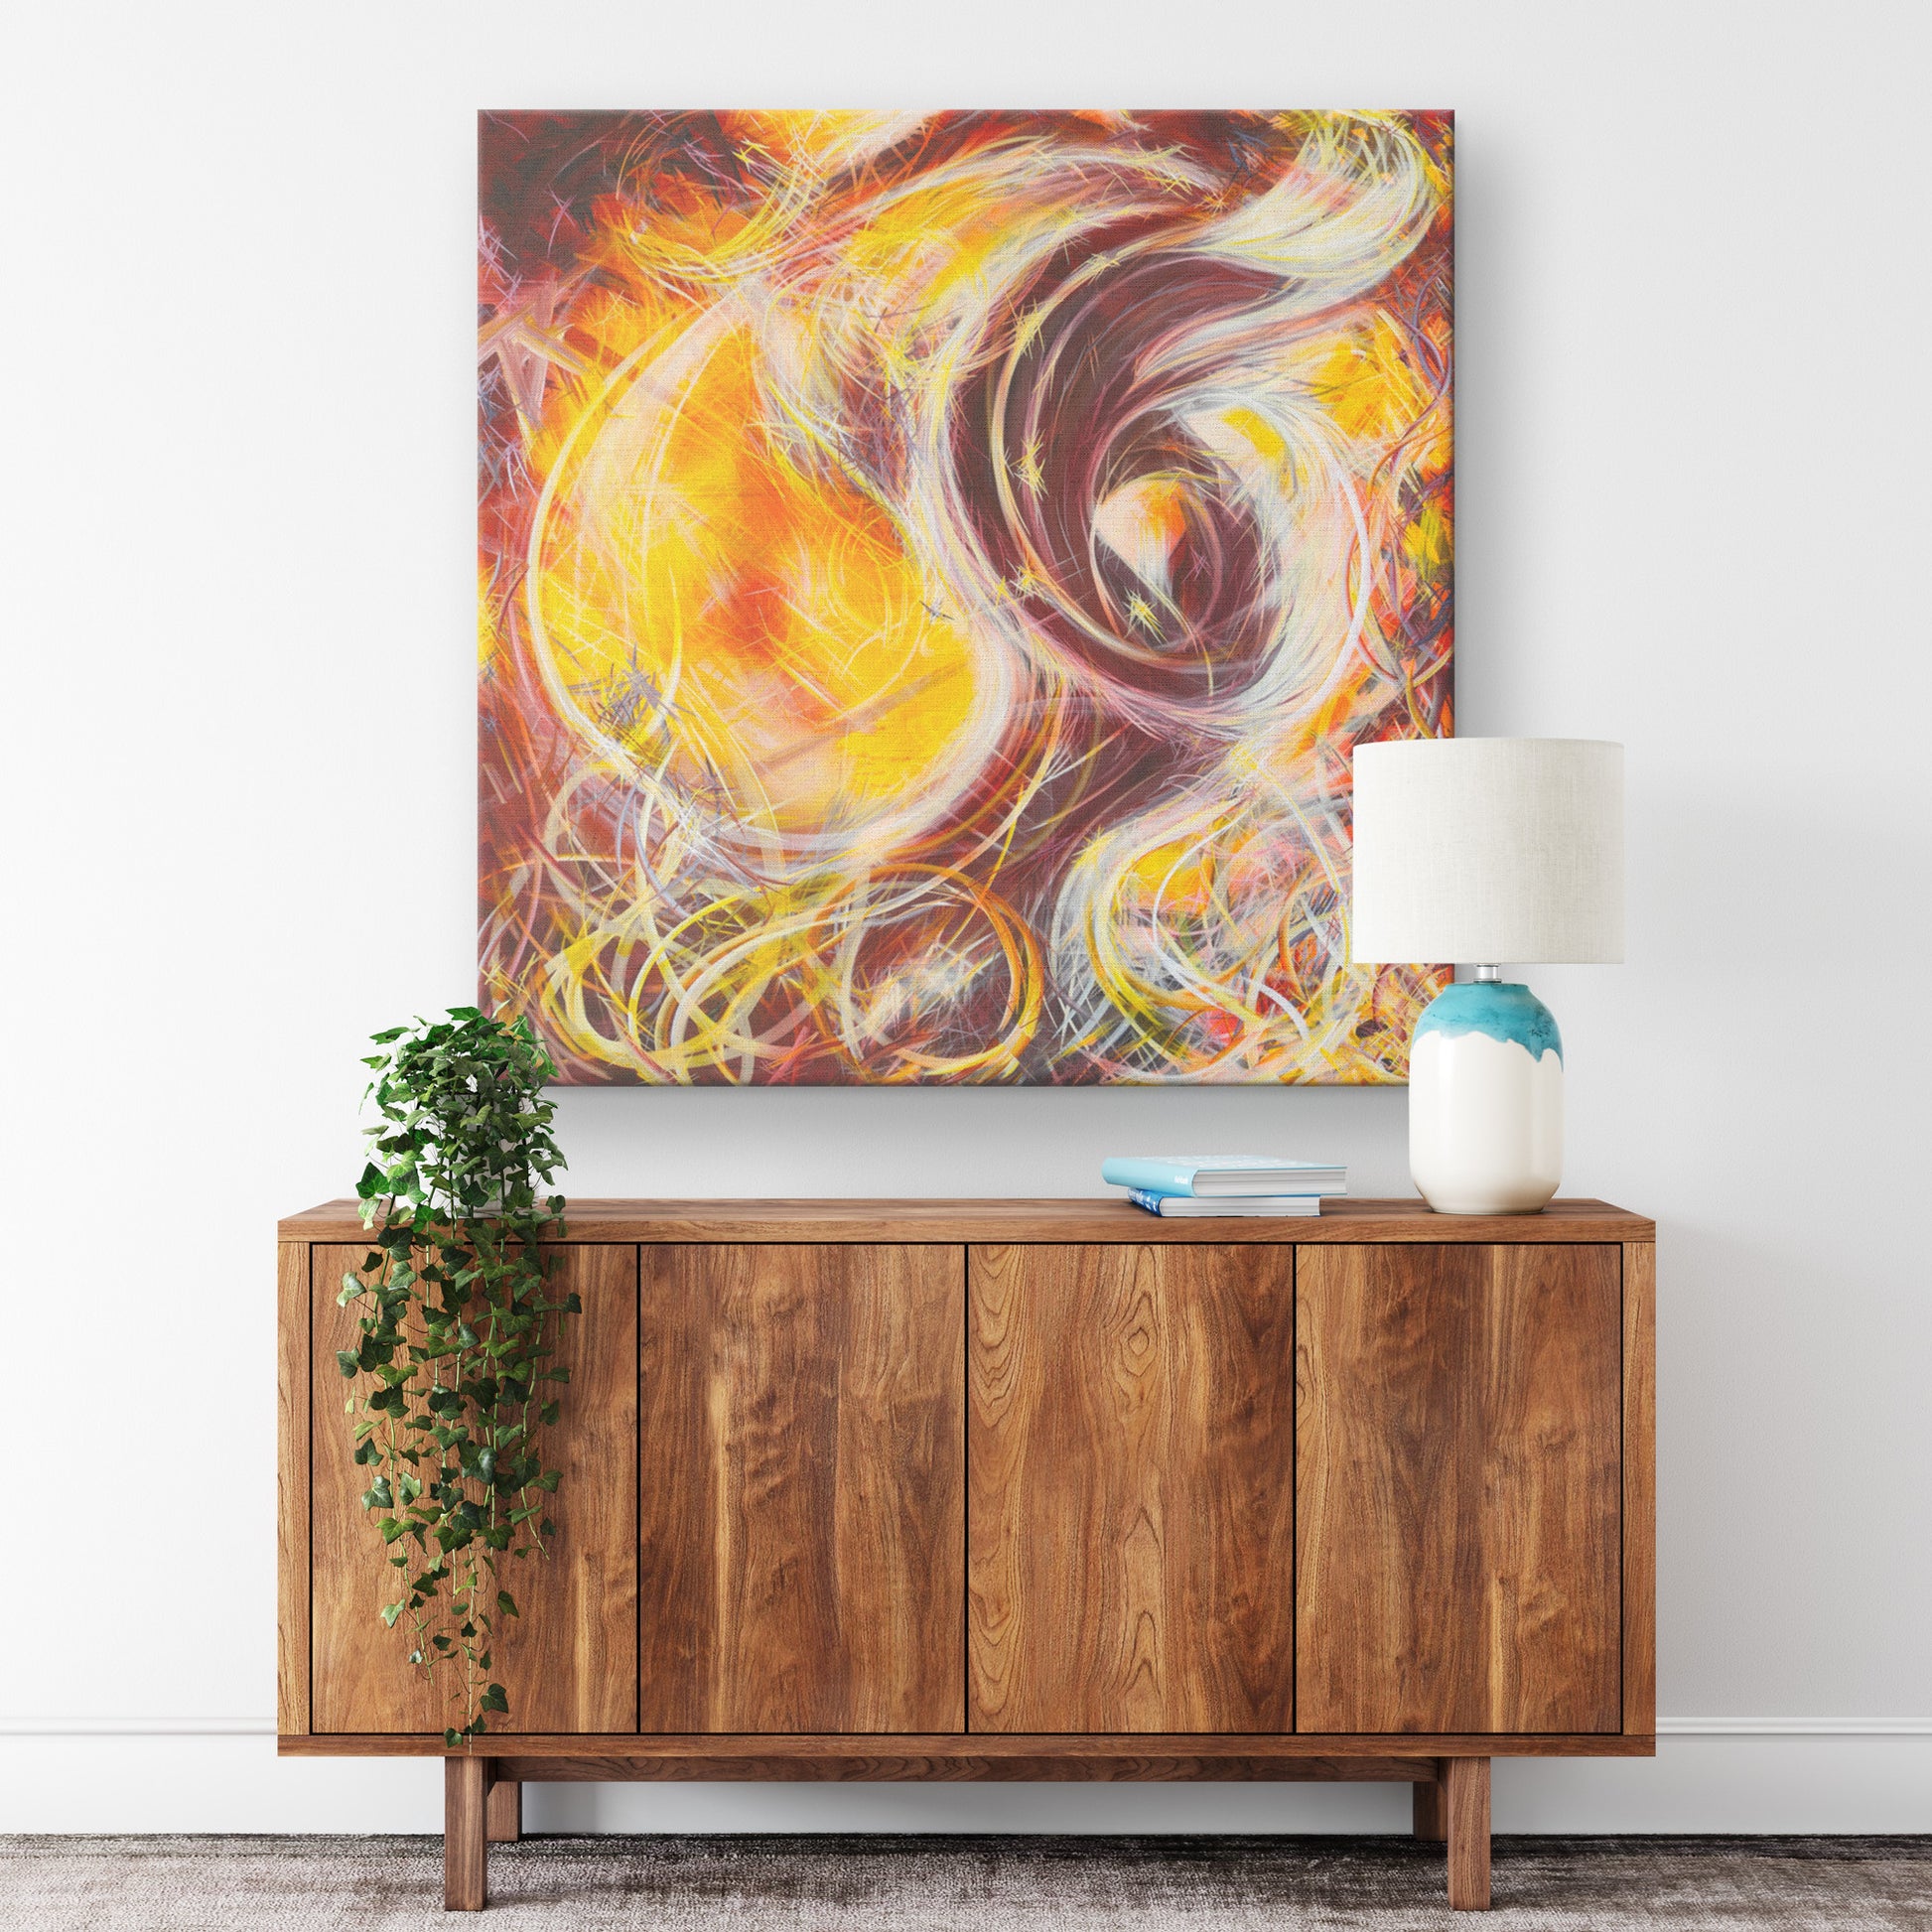 stunning phoenix rising painting by Michael Carini